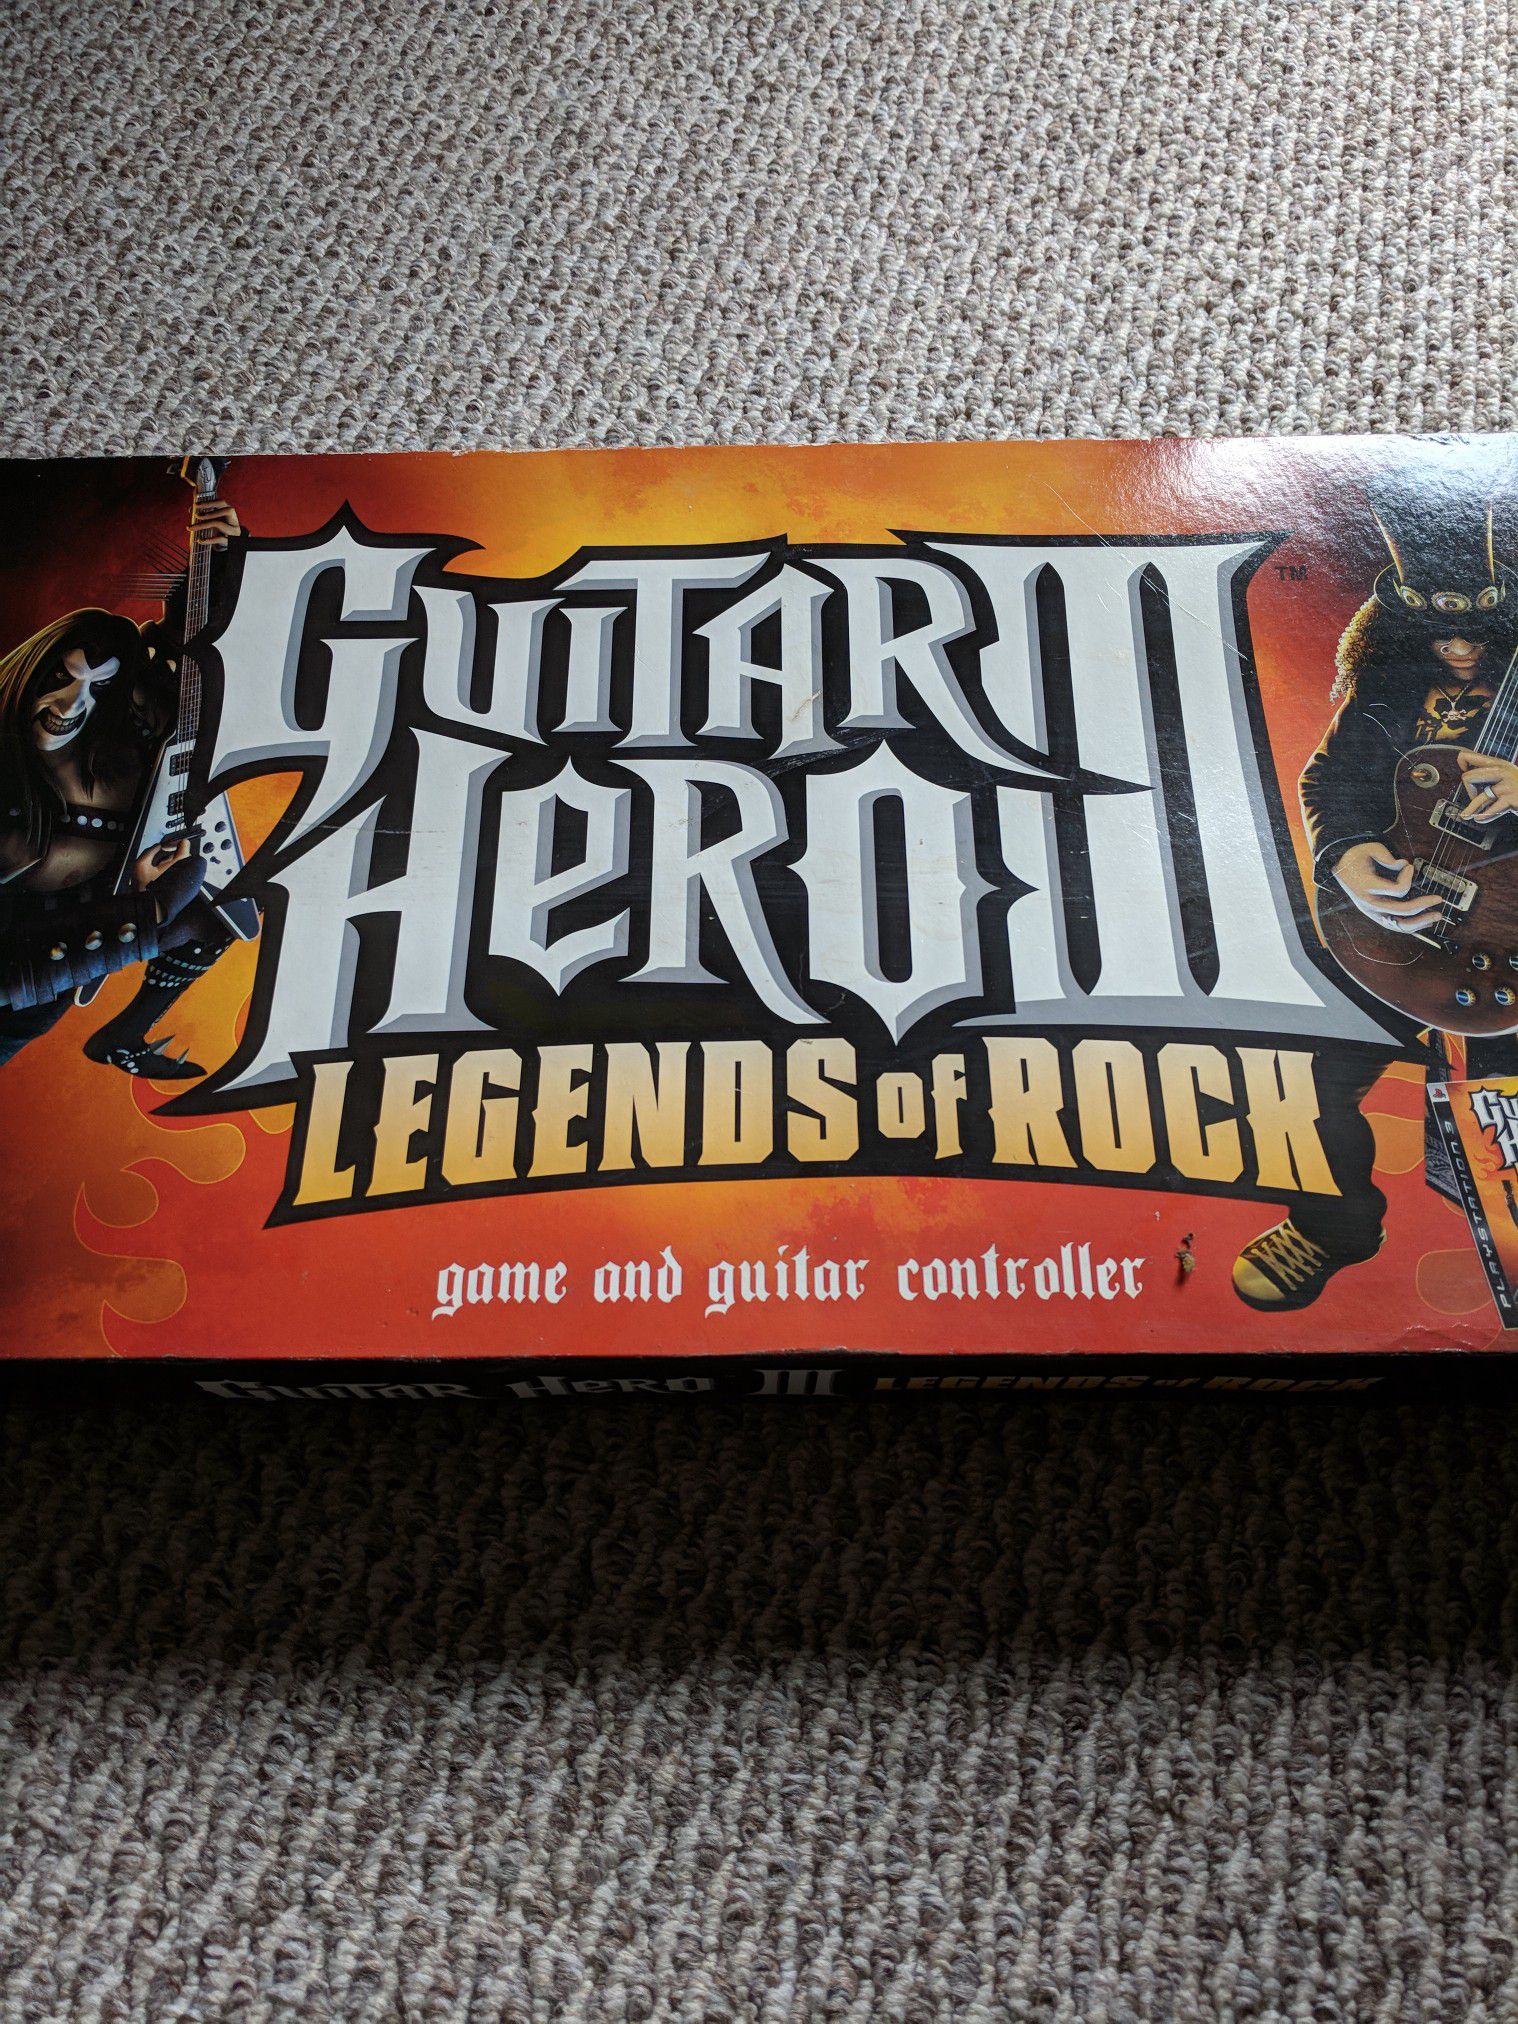 PS3 guitar hero 3 legends of rock bundle. Never used